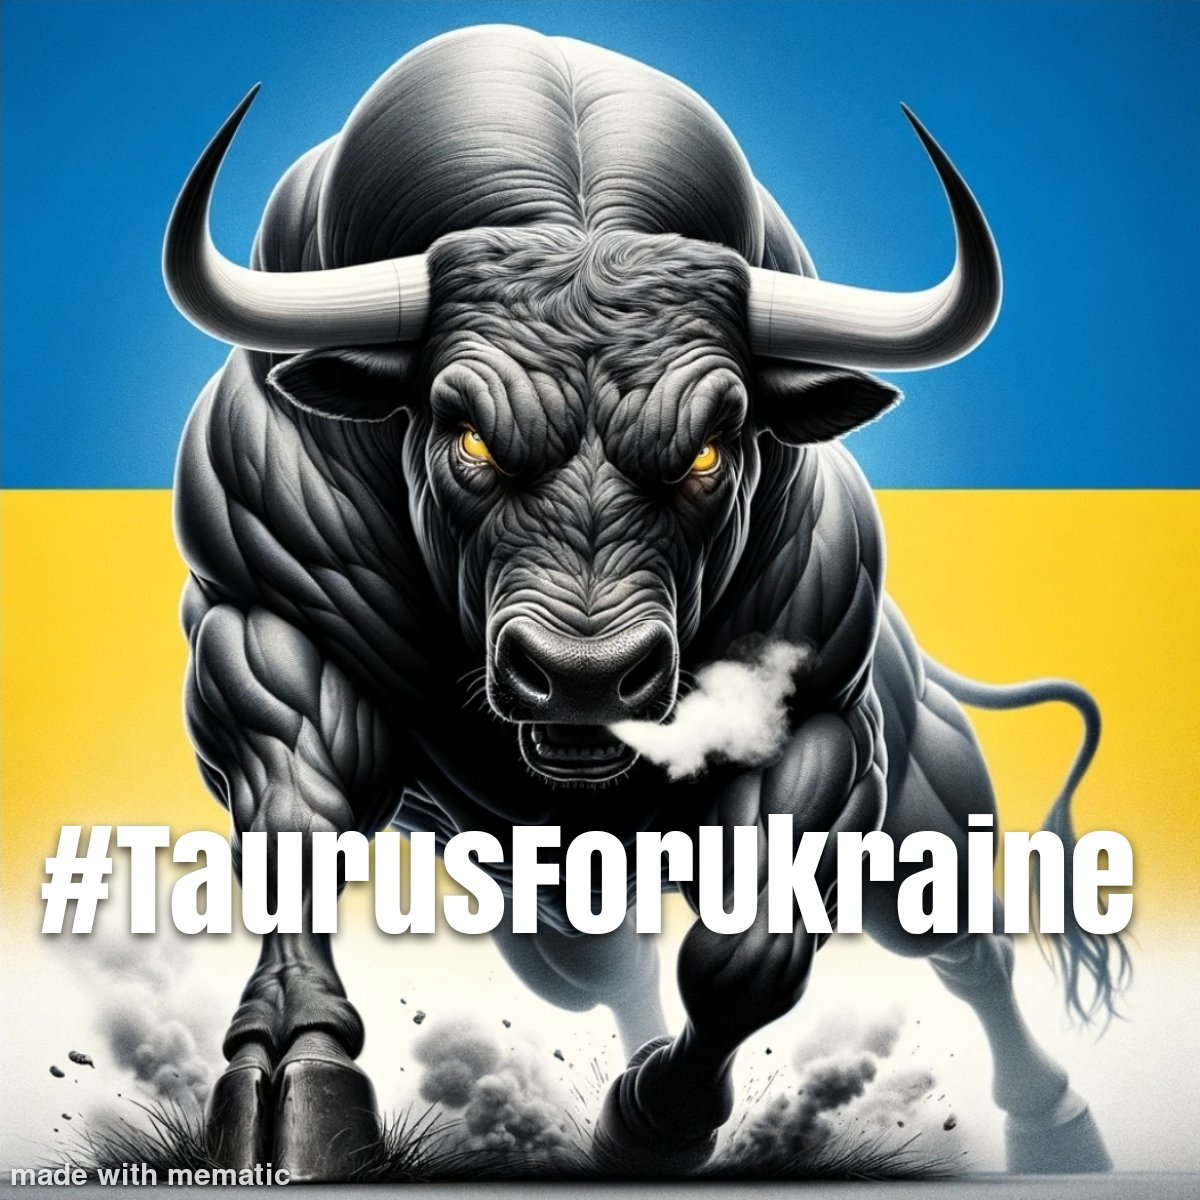 слава Україні !!
 #UkraineWillWin 
💛💙 for Ukraine 
#ArmUkraineToWin #FreeTheTaurus 
#TaurusForUkraine